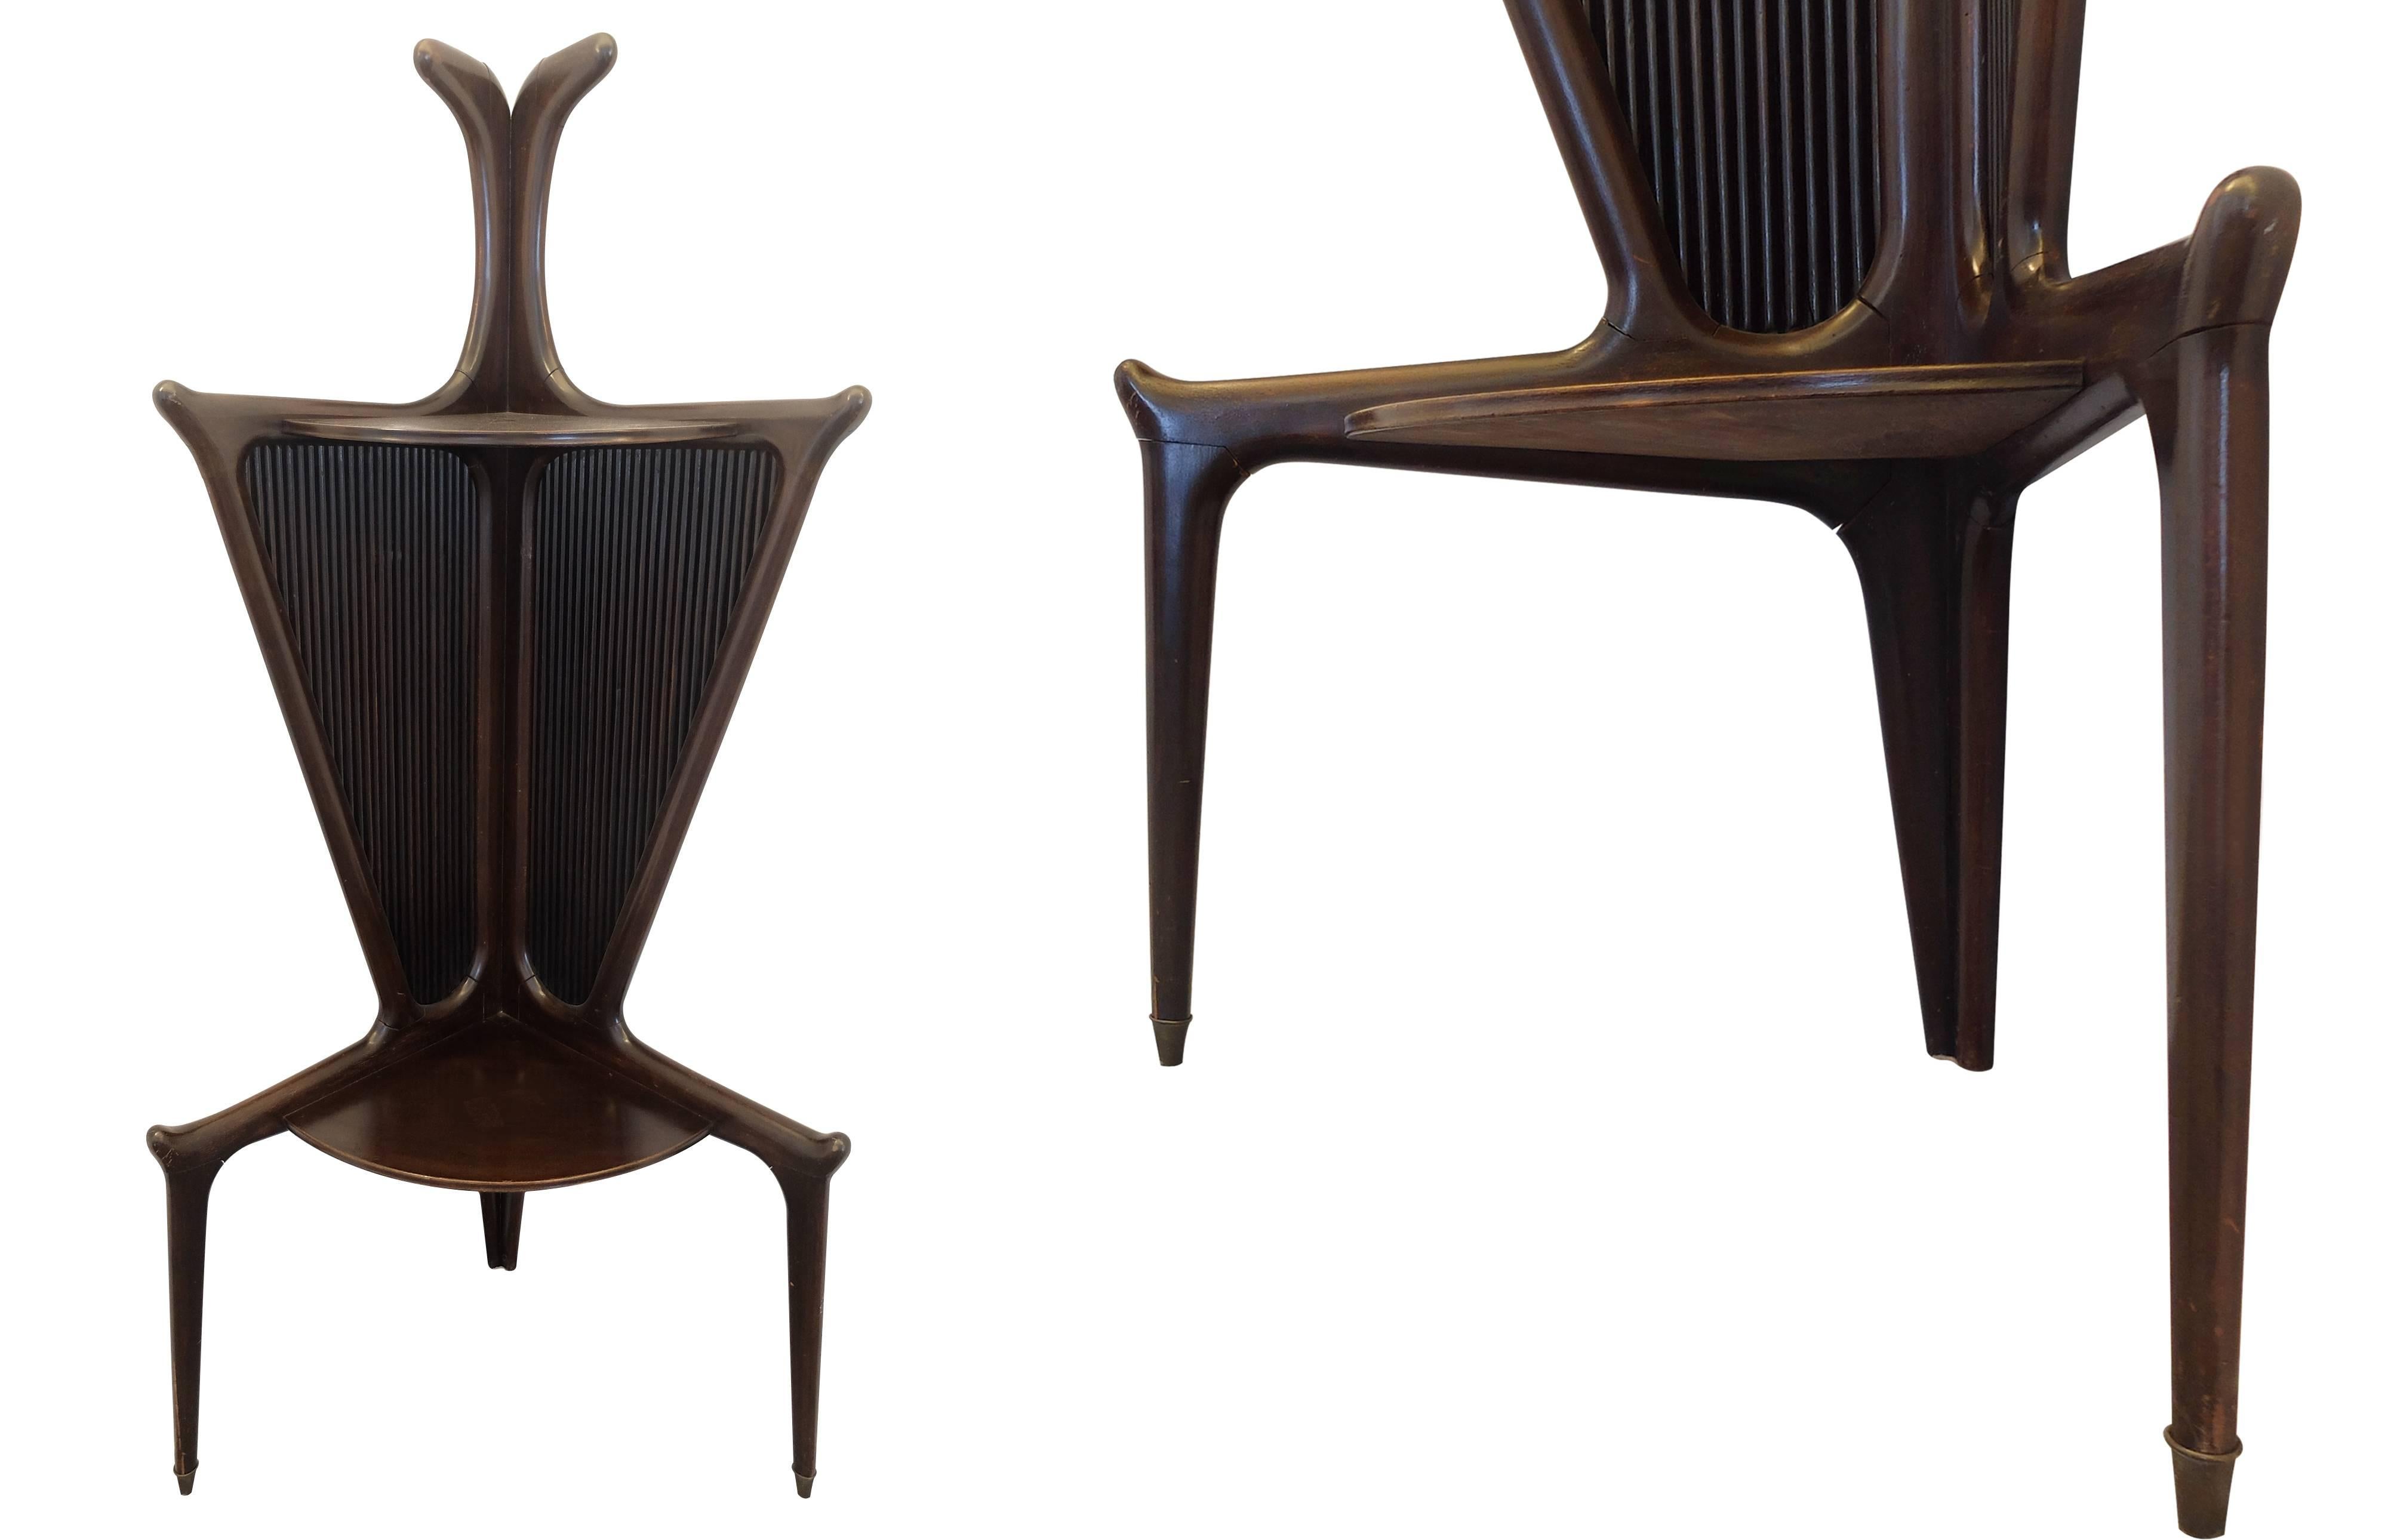 Mid-20th Century Authentic Italian Mid-Century Dark Rosewood Corner Tables from the 1950s